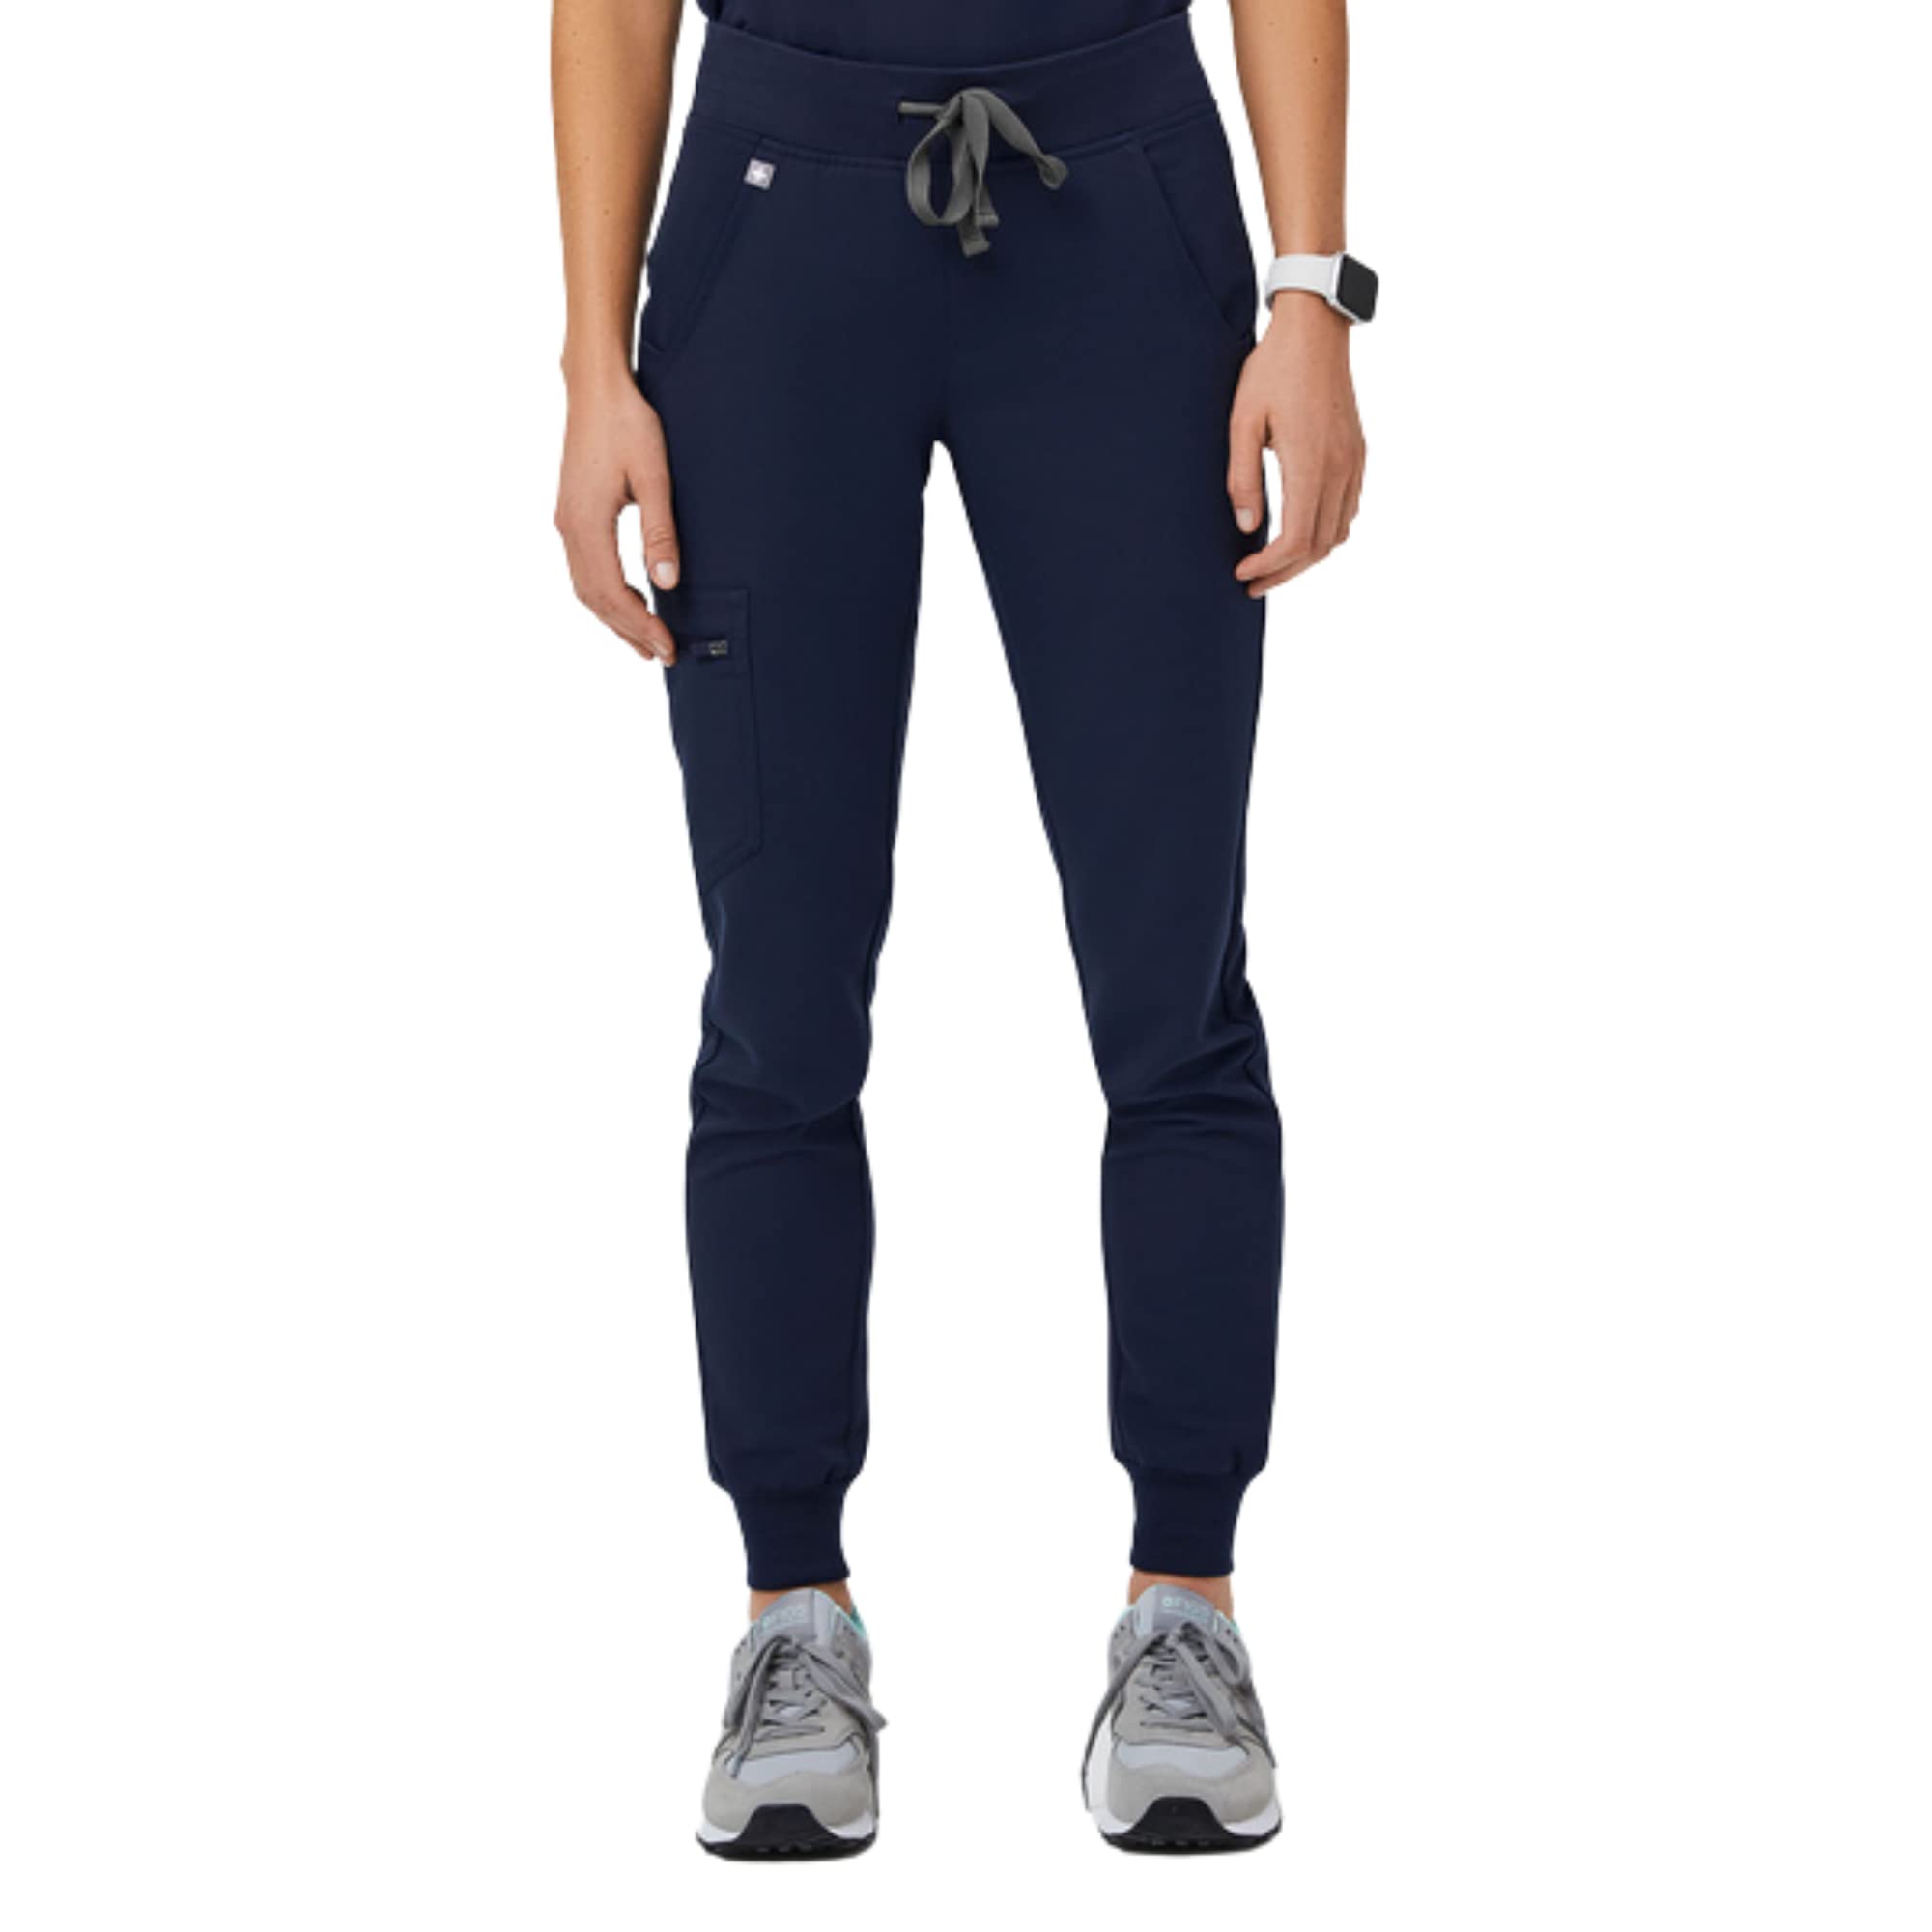 Figs Zamora Jogger Style Scrub Pants For Women - Navy, Xx-Large-Tall